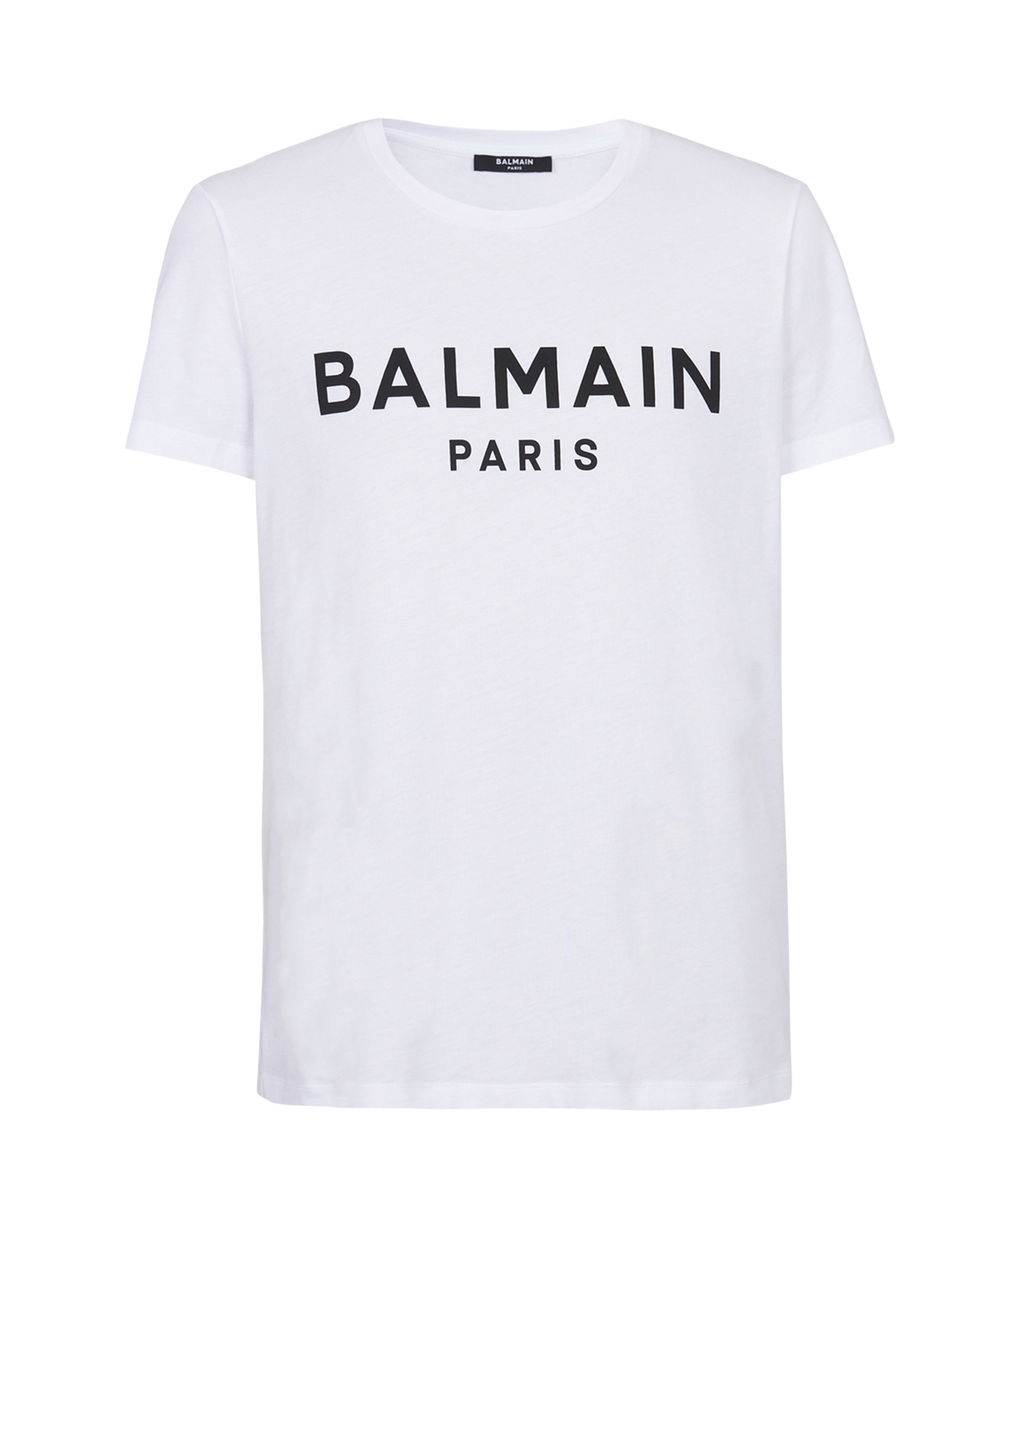 T-shirt en coton imprimé logo Balmain Paris, blanc, hi-res